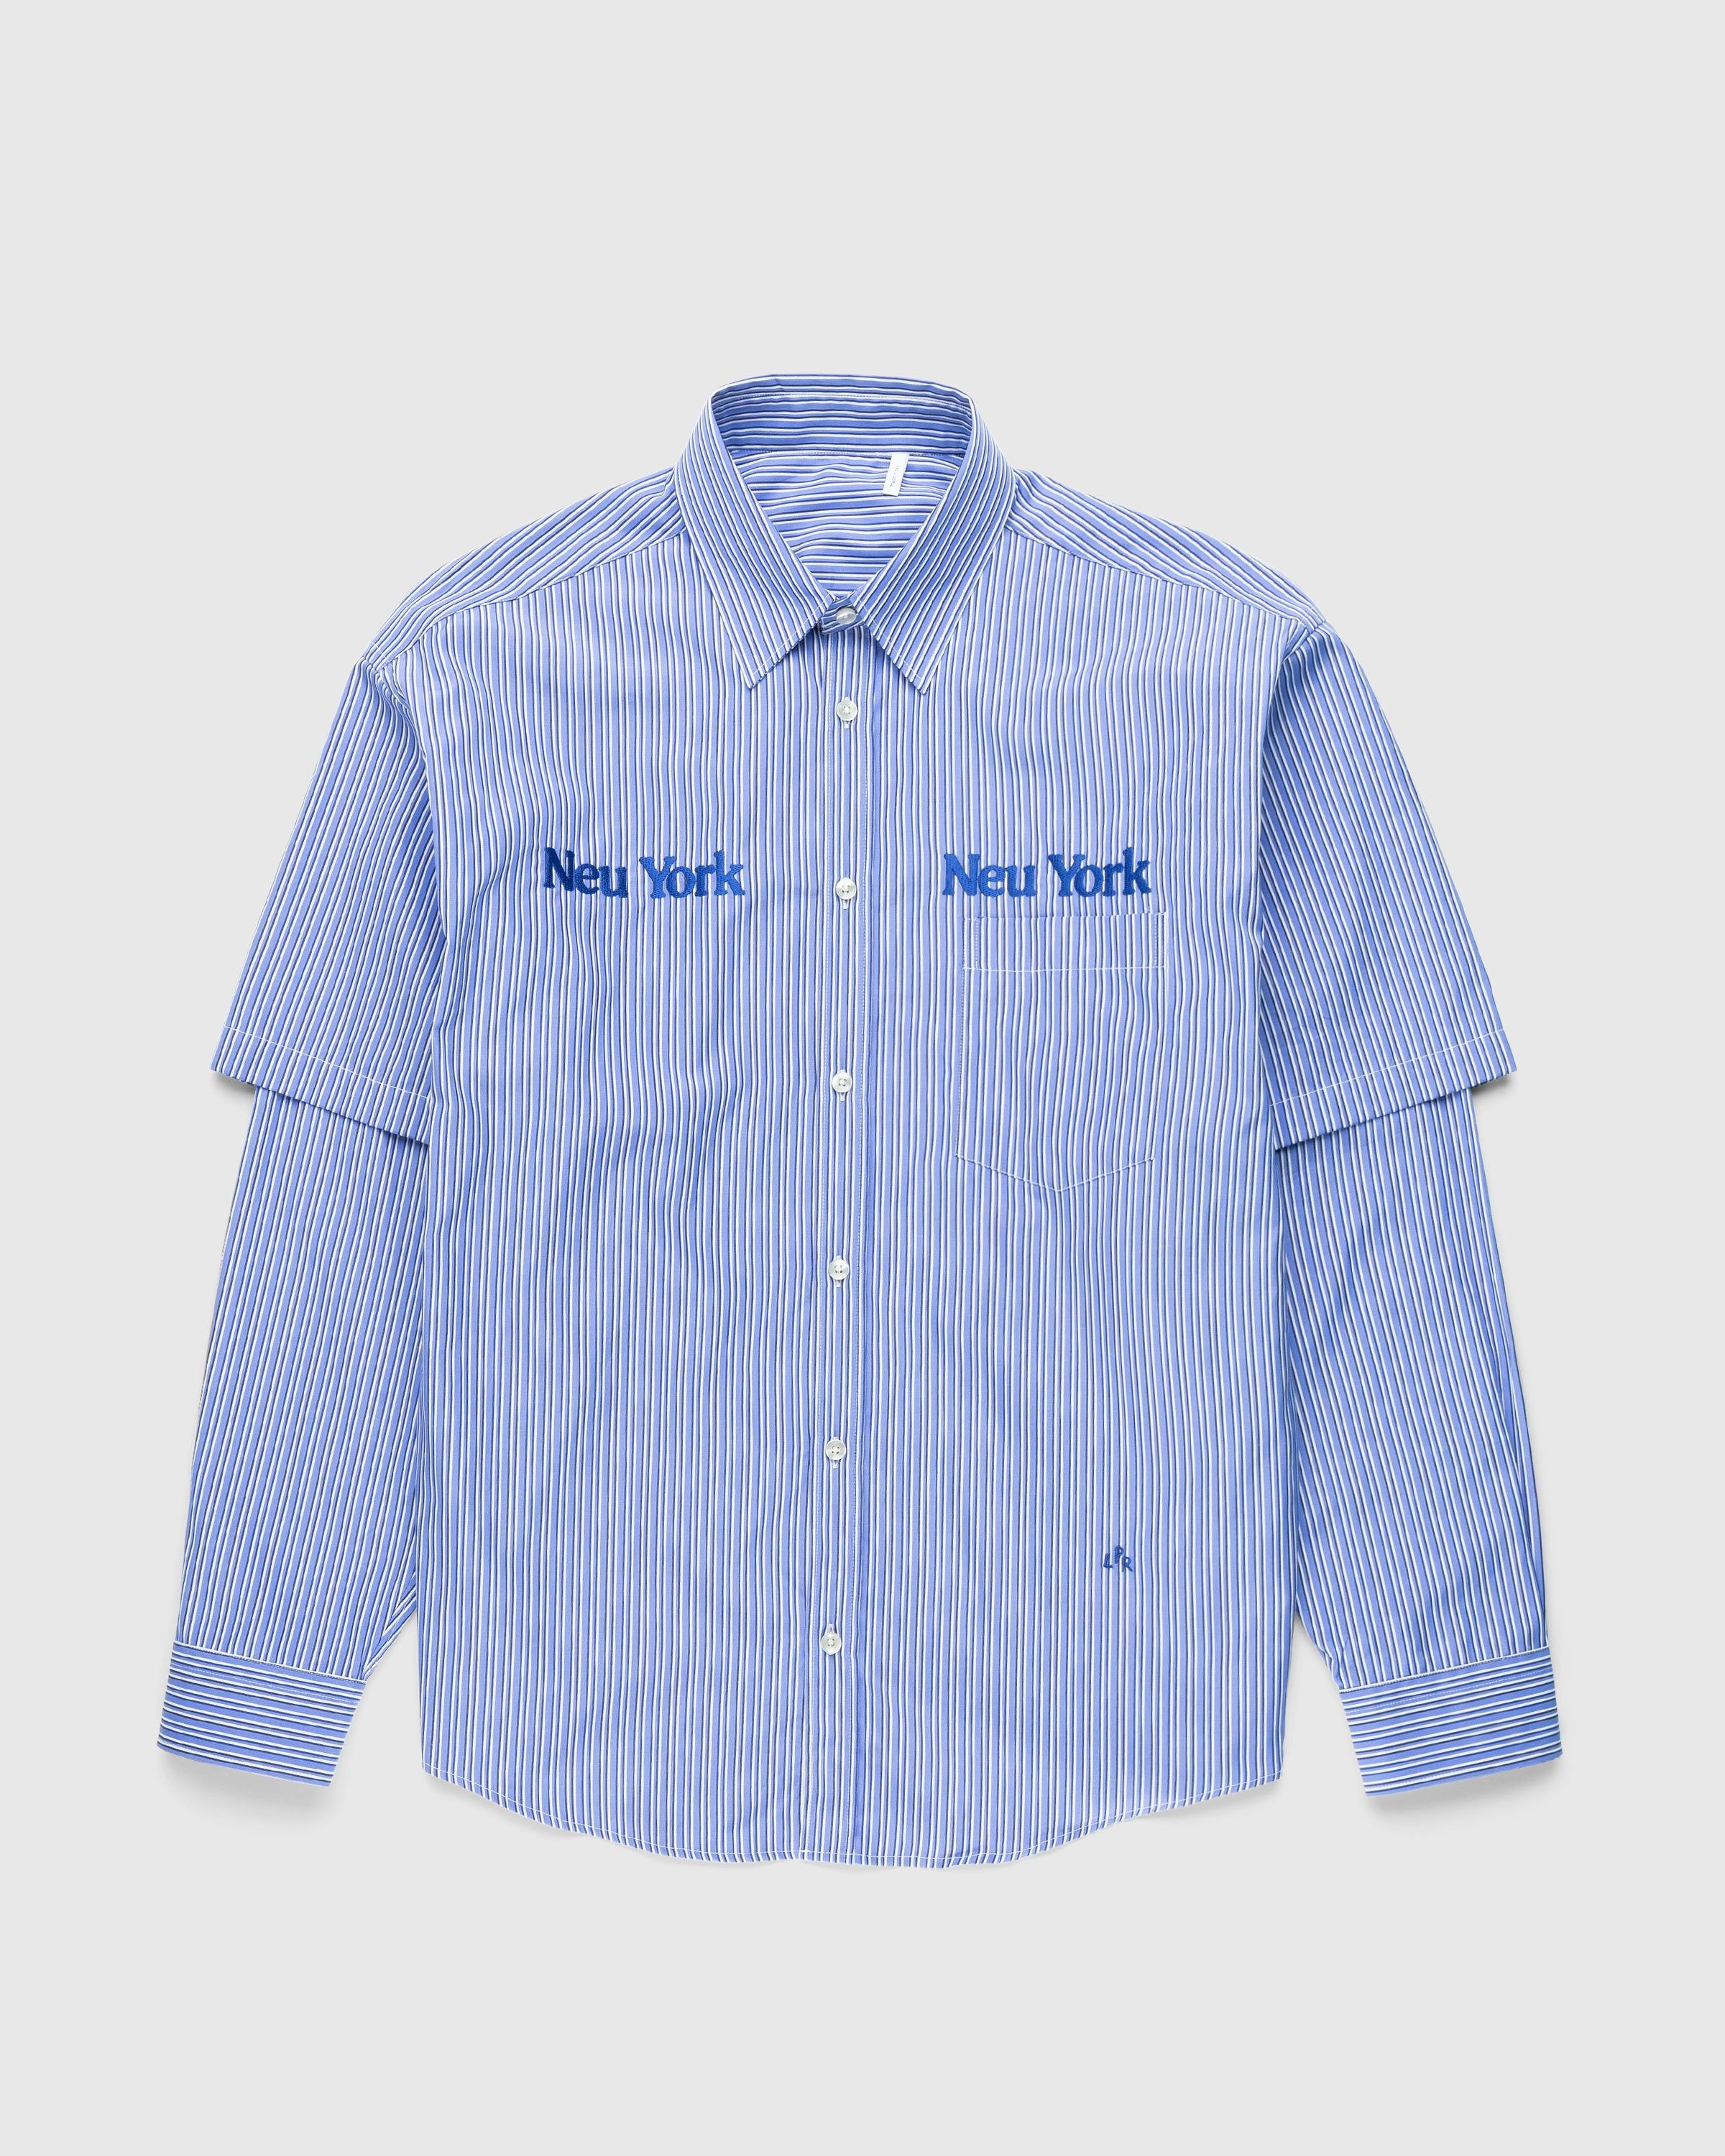 Highsnobiety x Le Père – "Neu York Neu York" Double Sleeve Shirt Blue - Shirts - Blue - Image 1